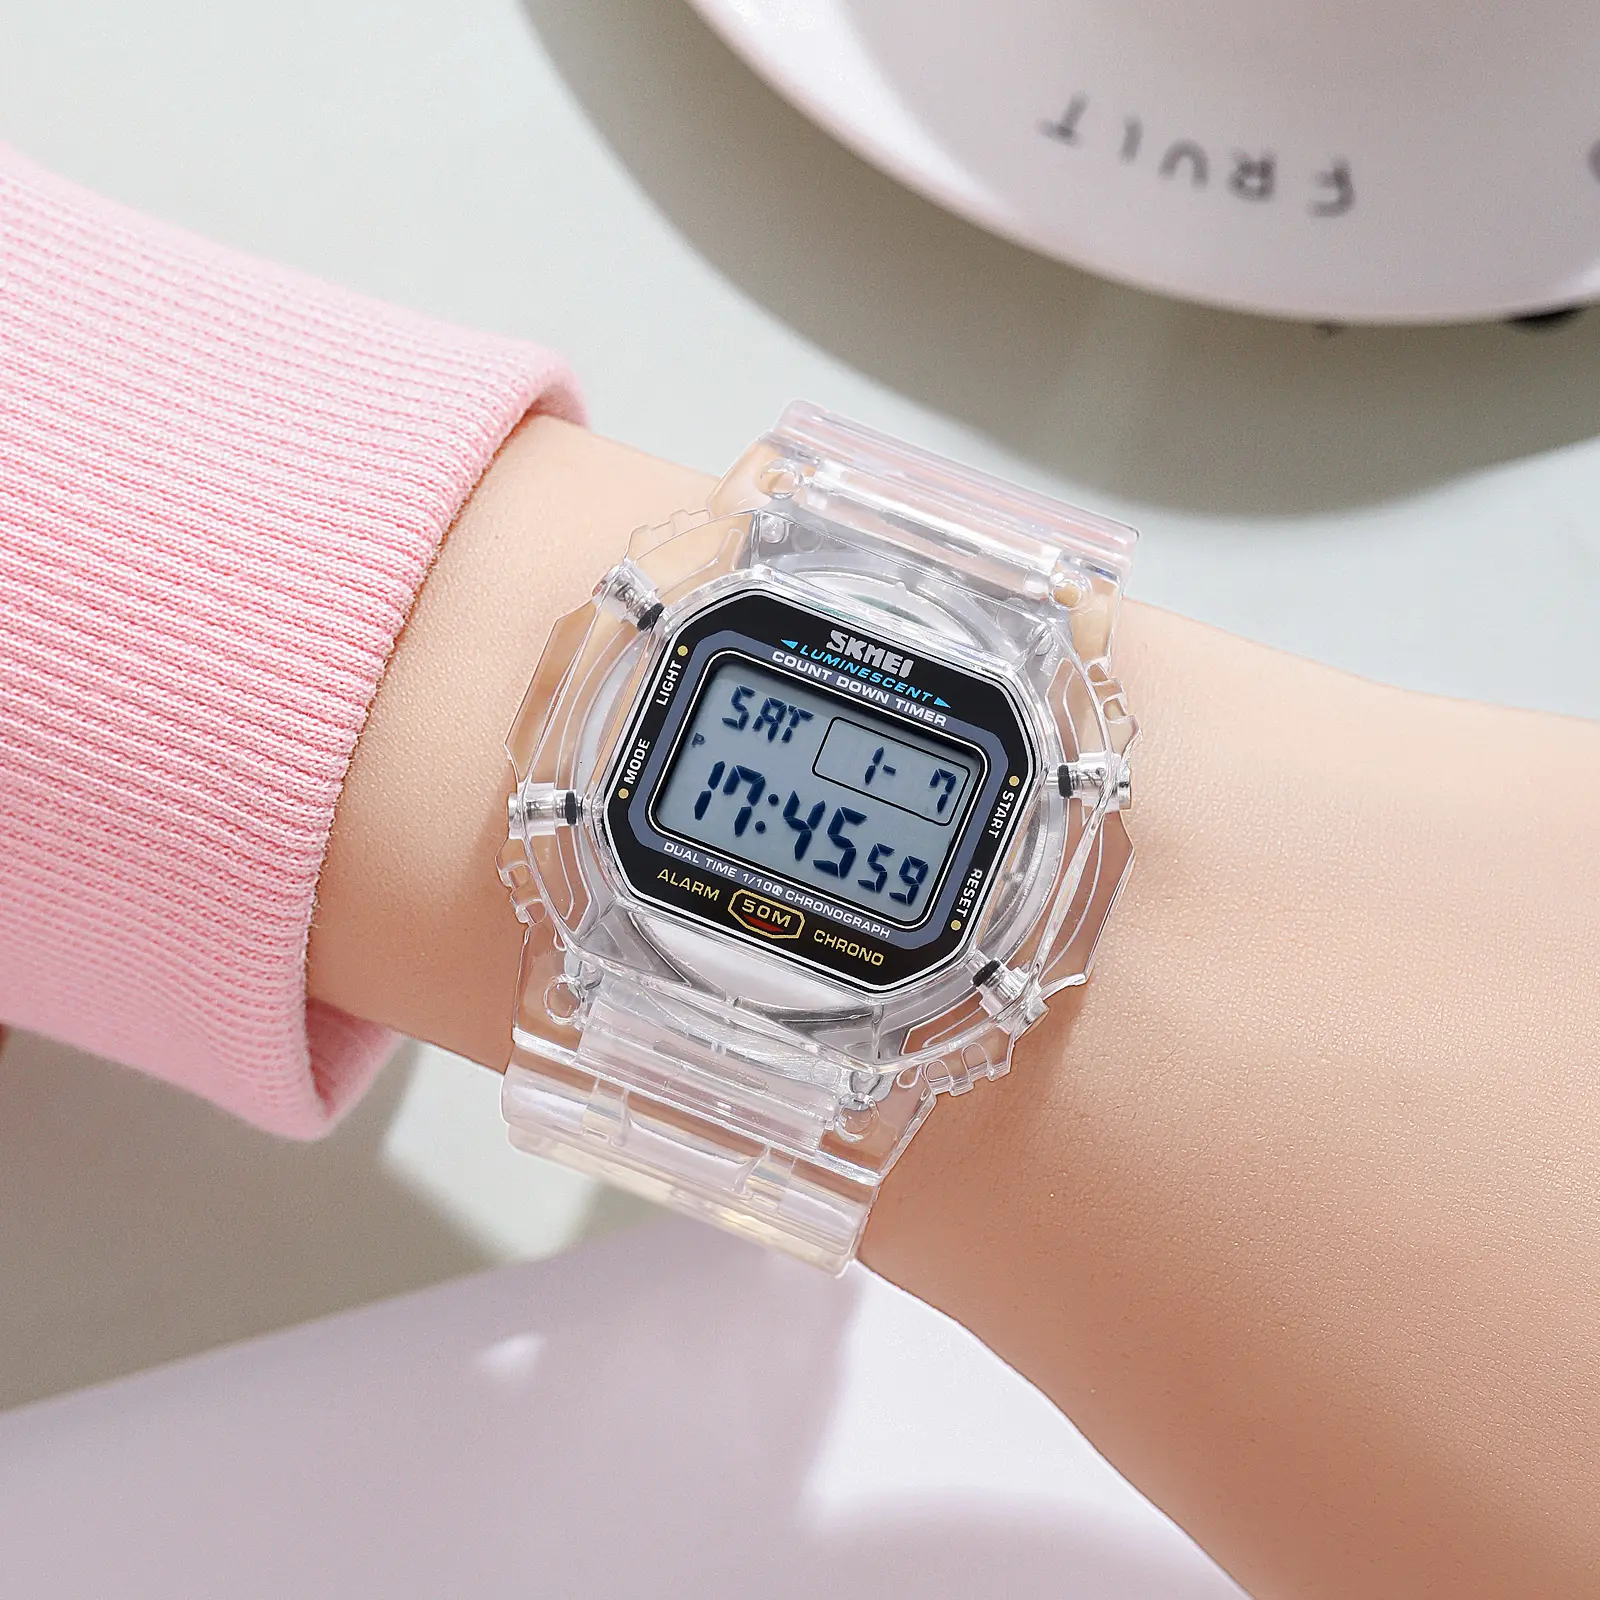 Skmei 1999 cheap reloj plastic LE light watch stopwatch 5TAM multifunction transparente chronograph led digital sports watches